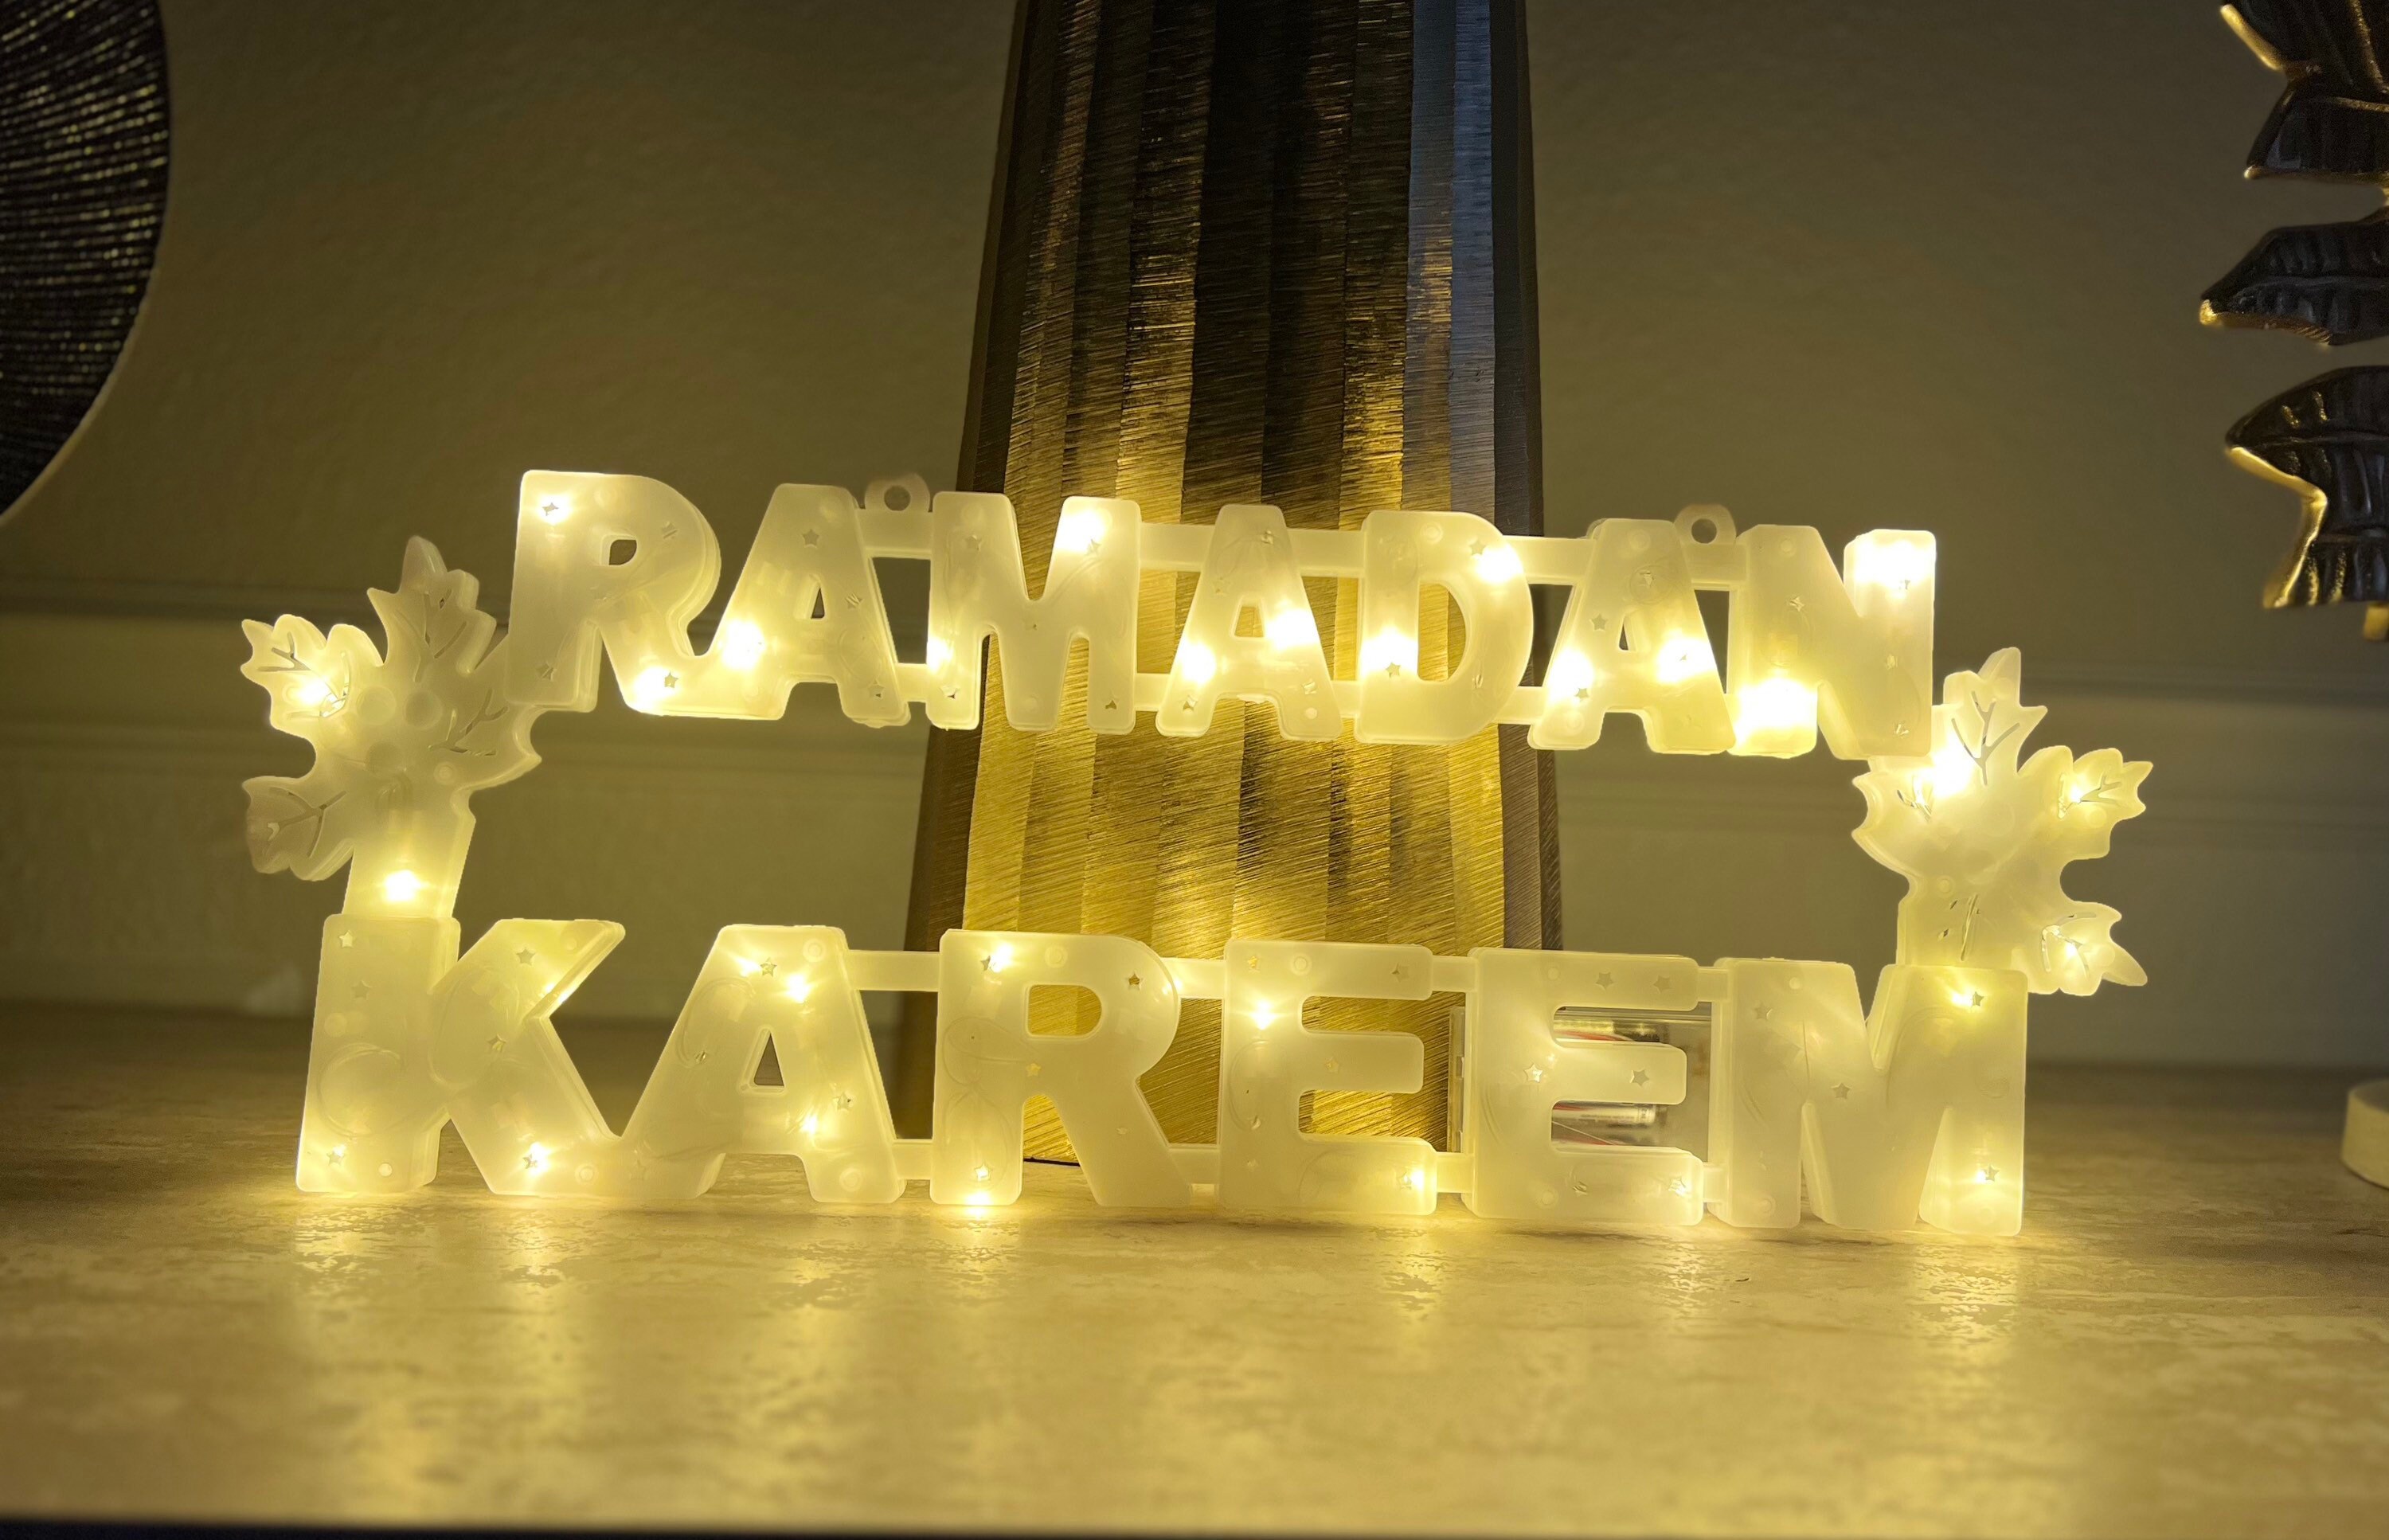 Ramadan Decorations Ideas  Ramadan decorations, Ramadan kareem